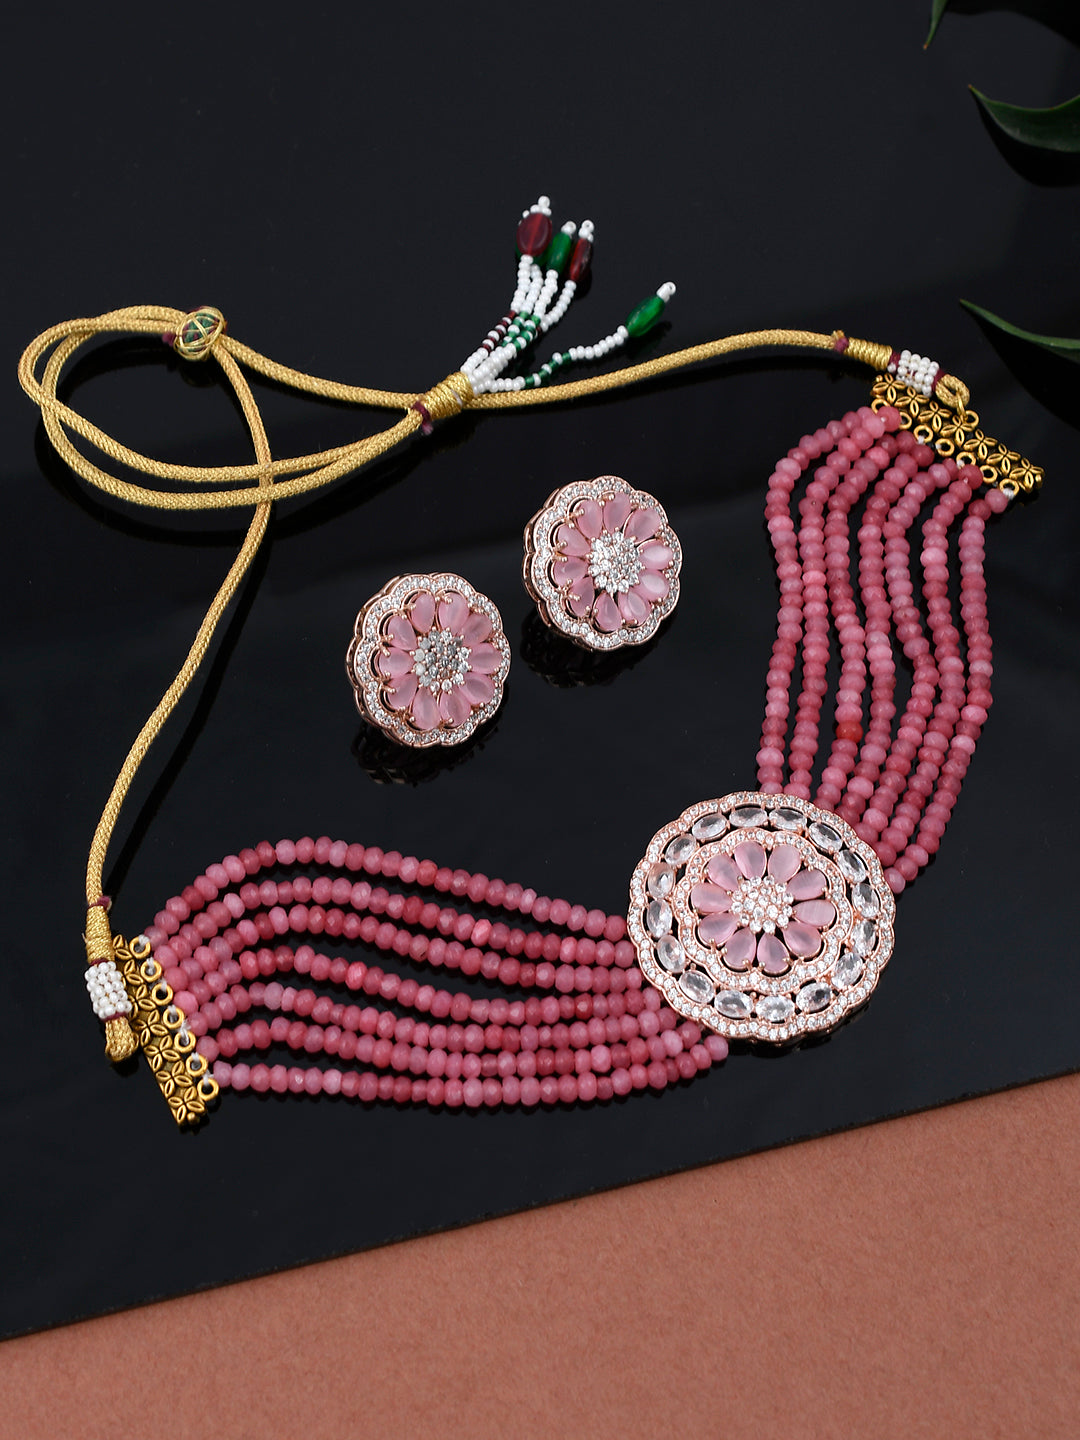 mnjin personalized water drop necklace pendant earrings ring jewelry set  fashion love jewelry for women and girls purple - Walmart.com